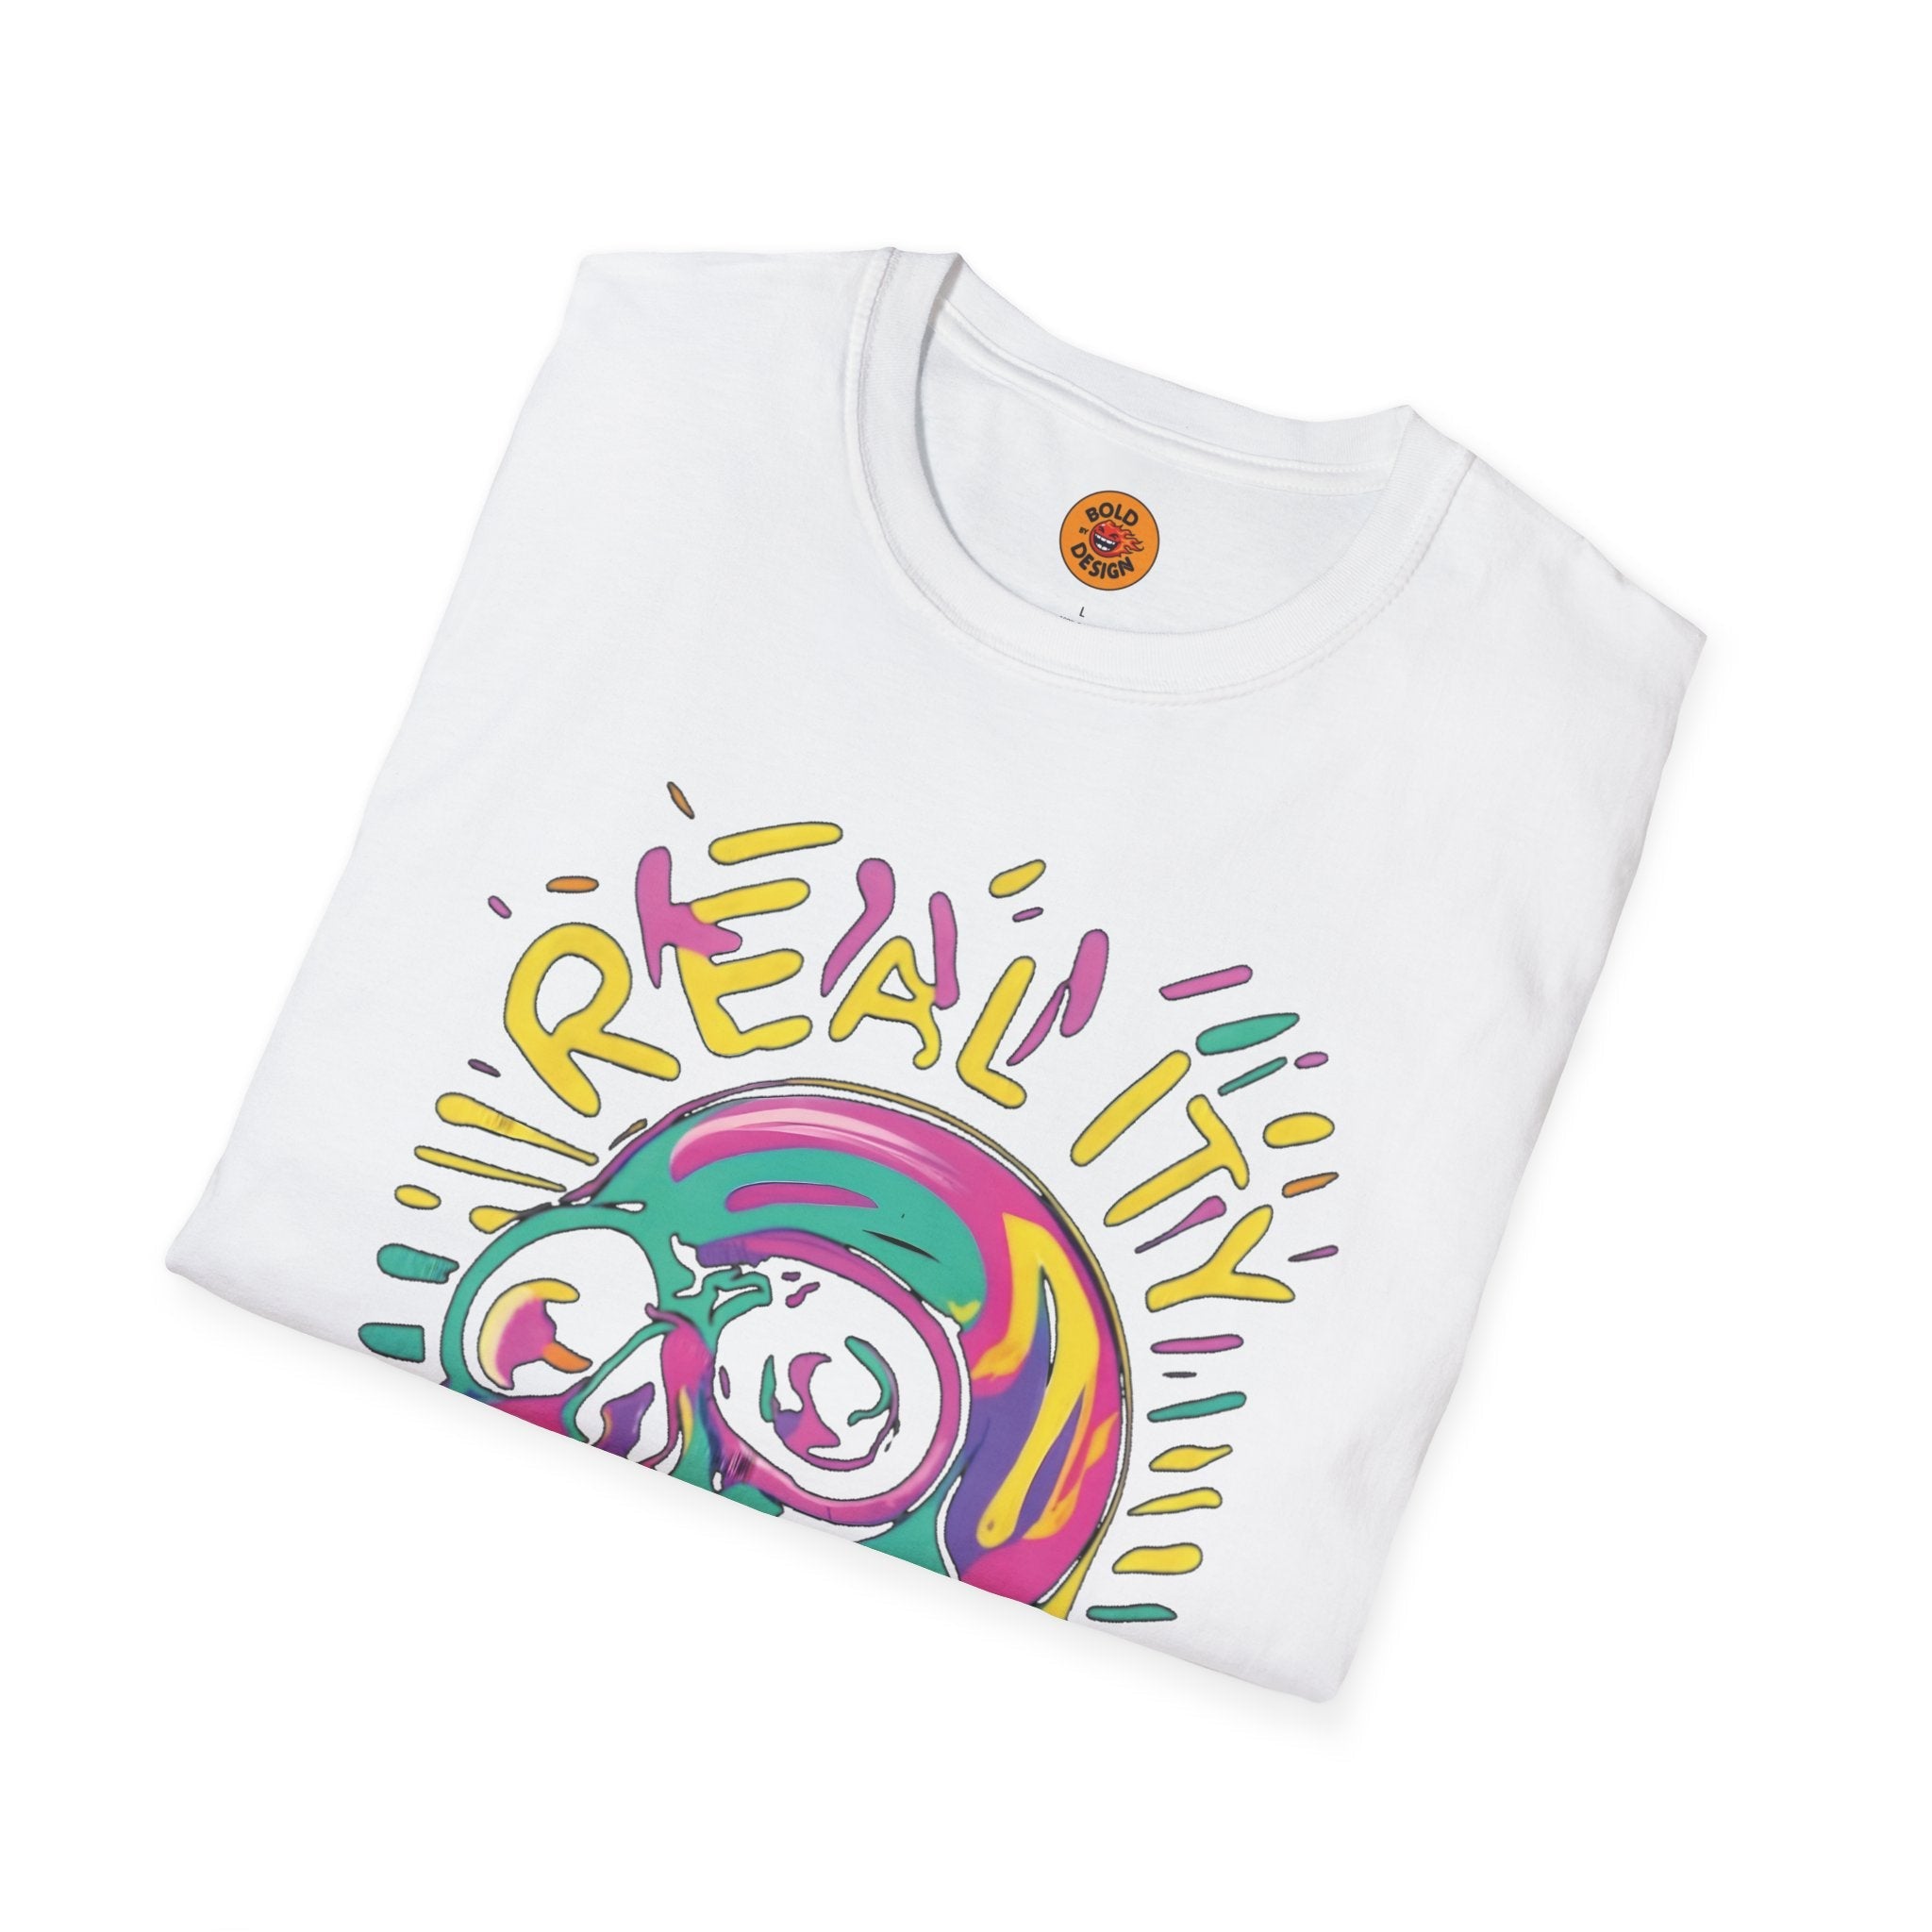 Glitch Art Skull T-Shirt-Bold By Design 